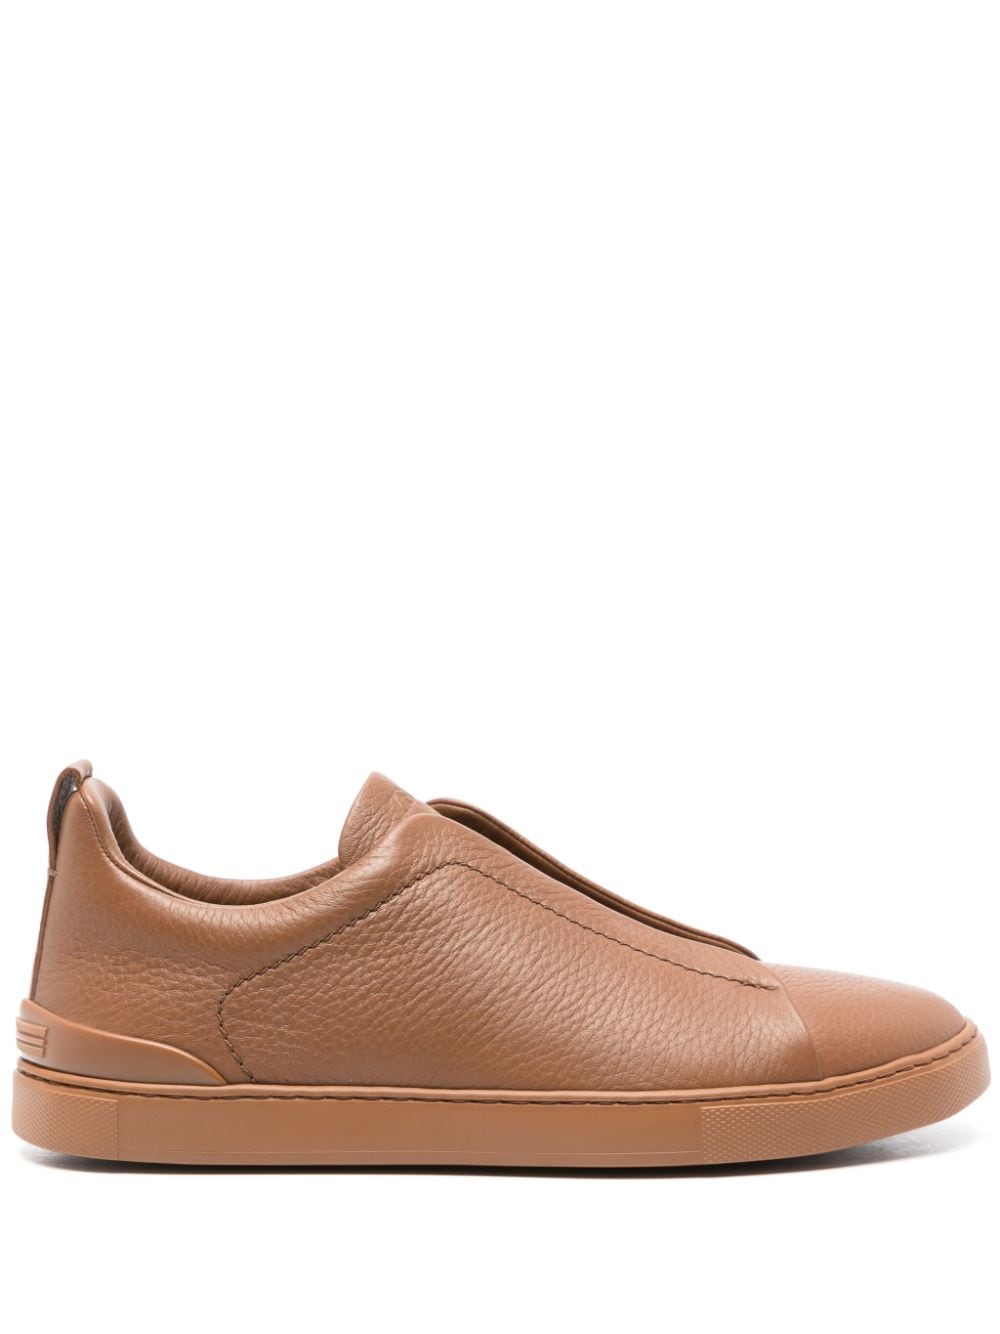 Zegna leather slip-on sneakers - Brown von Zegna